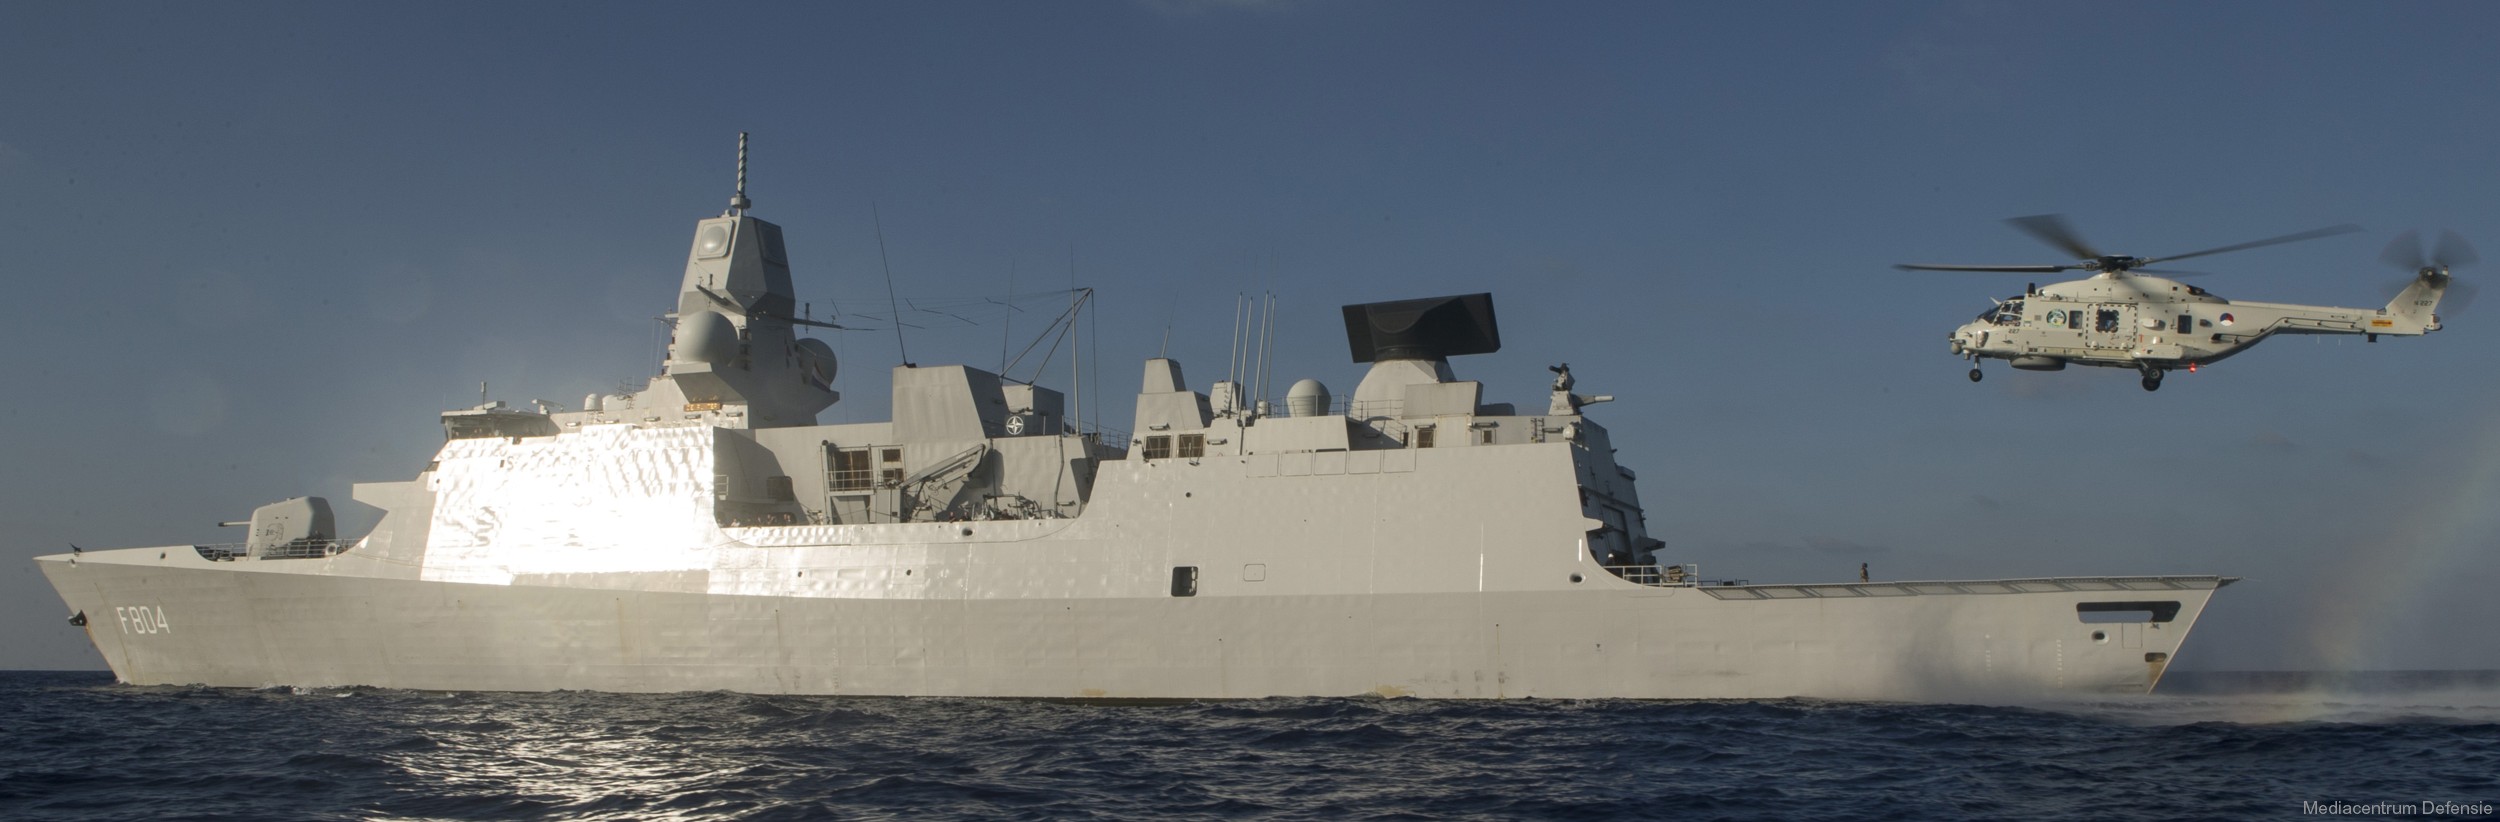 f-804 hnlms de ruyter guided missile frigate ffg lcf royal netherlands navy 07